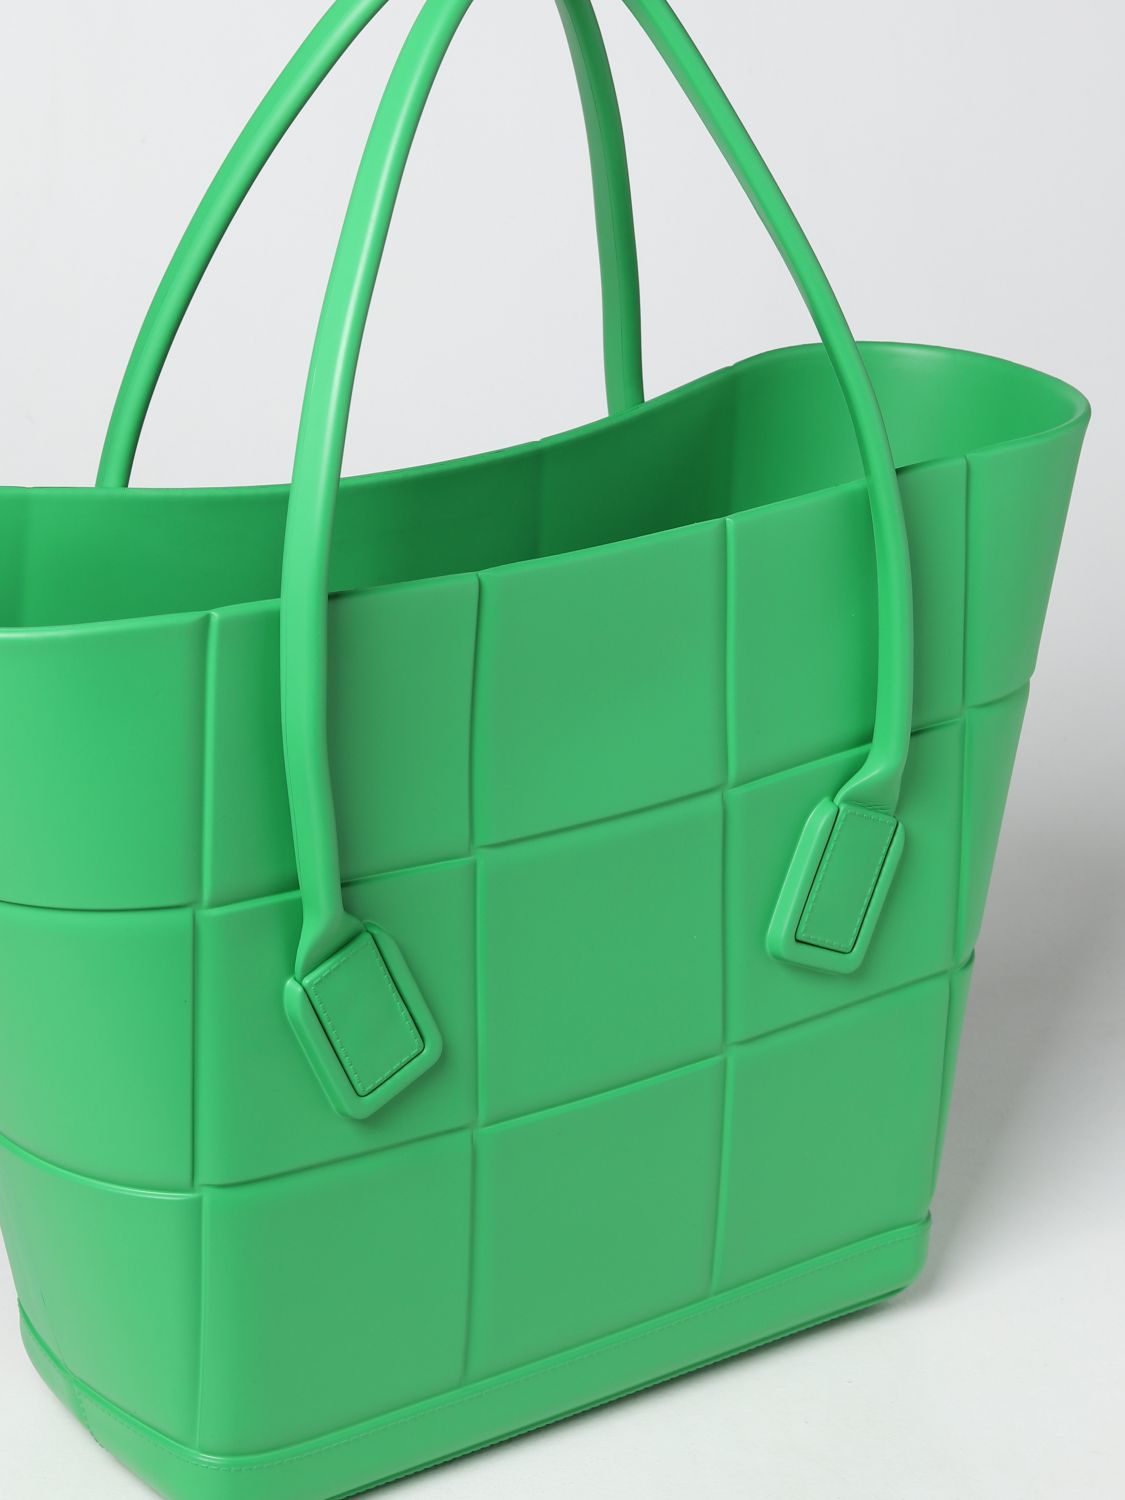 BOTTEGA VENETA: Arco rubber bag - Green | Bottega Veneta tote bags ...